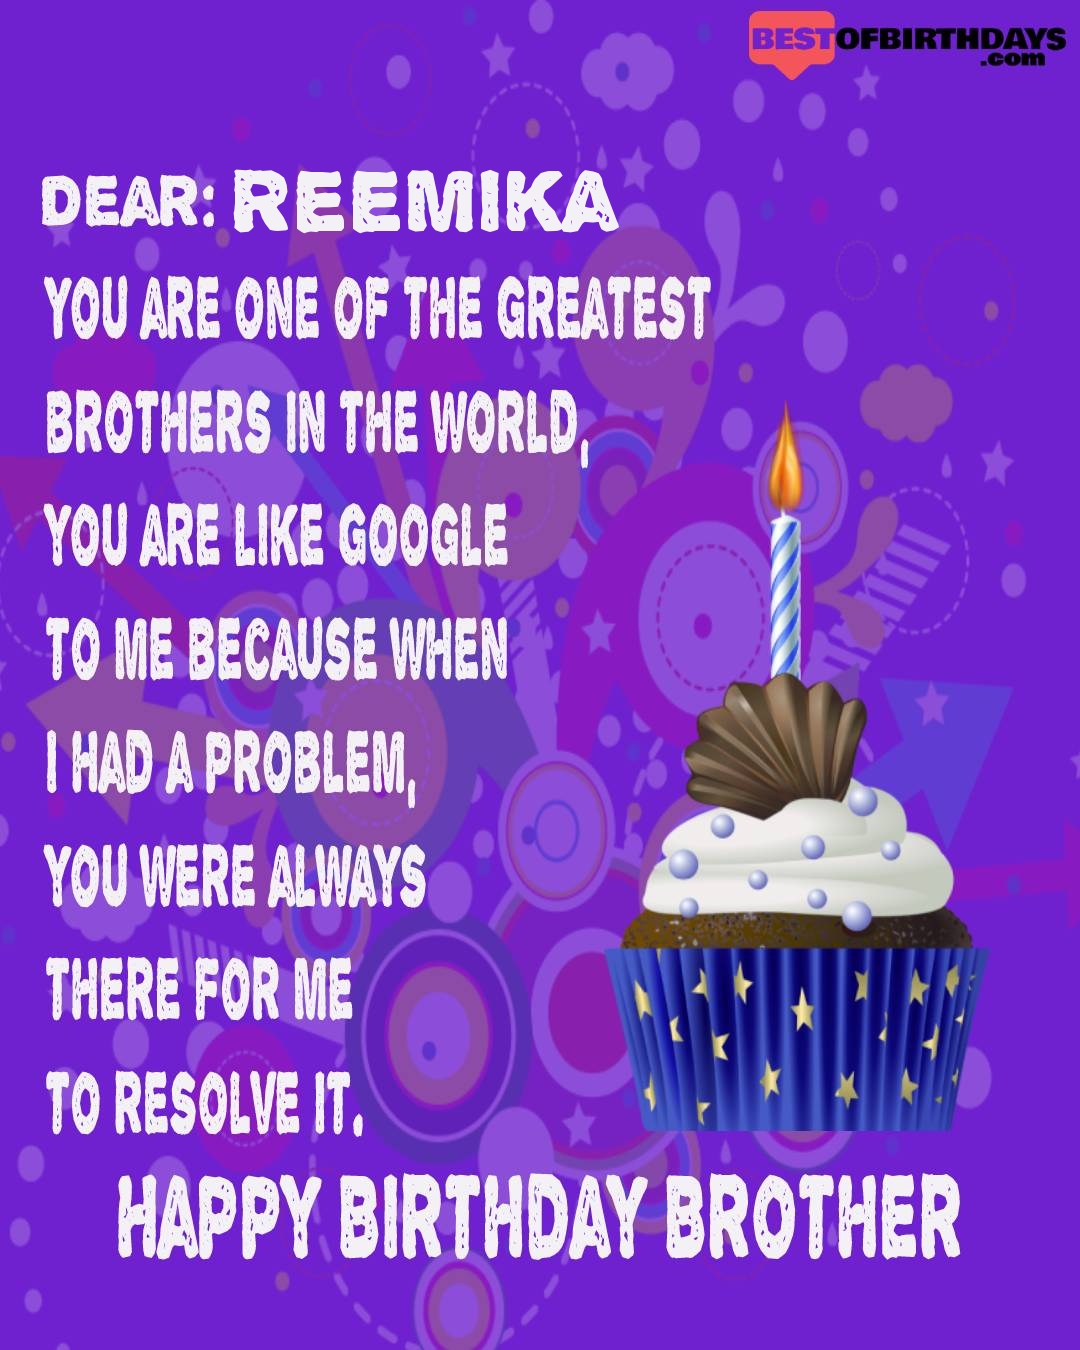 Happy birthday reemika bhai brother bro